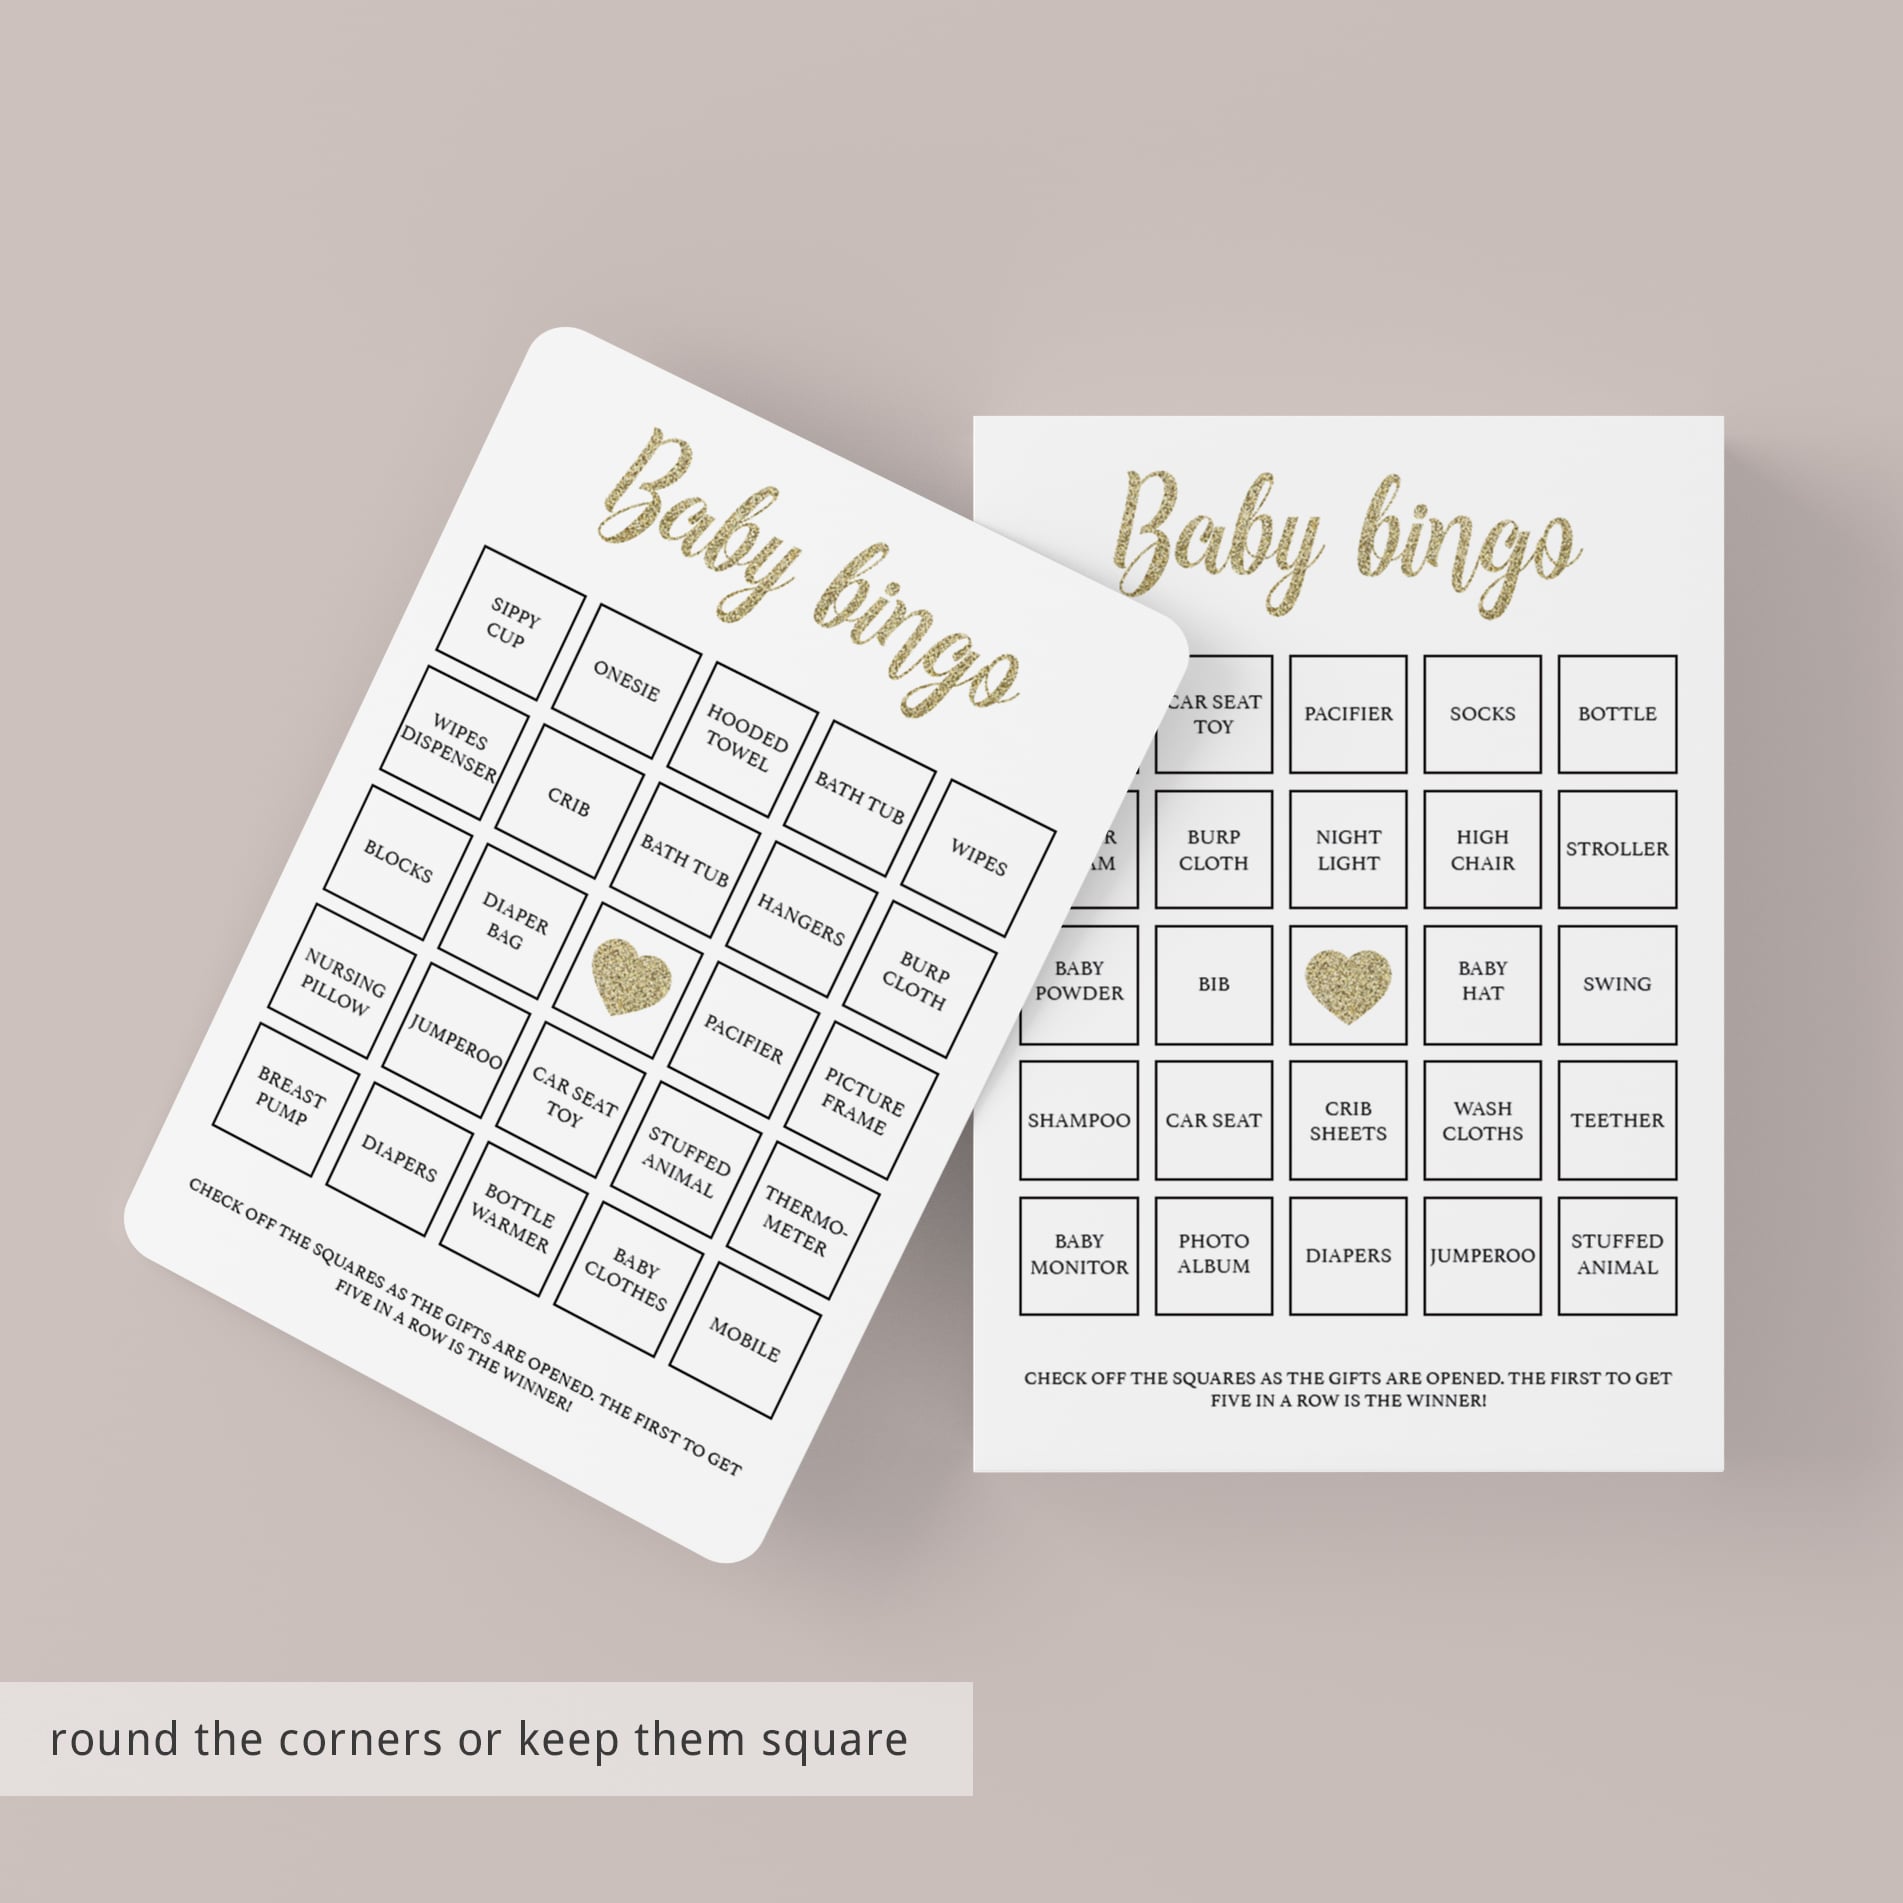 Baby bingo games for gender neutral baby shower by LittleSizzle